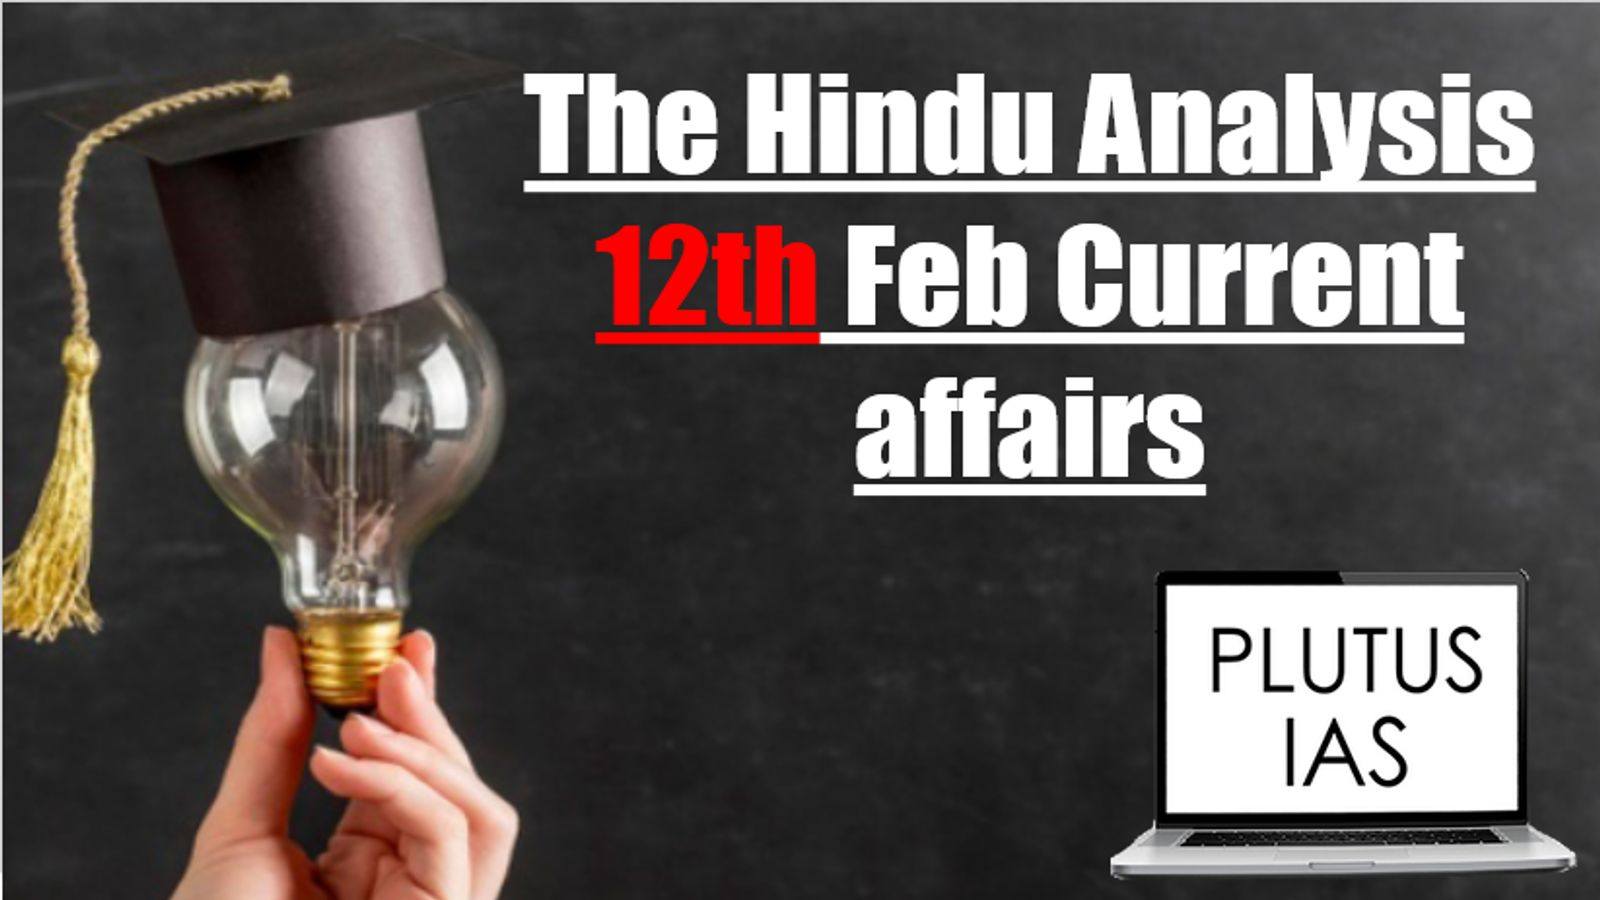 The Hindu Analysis 12th February